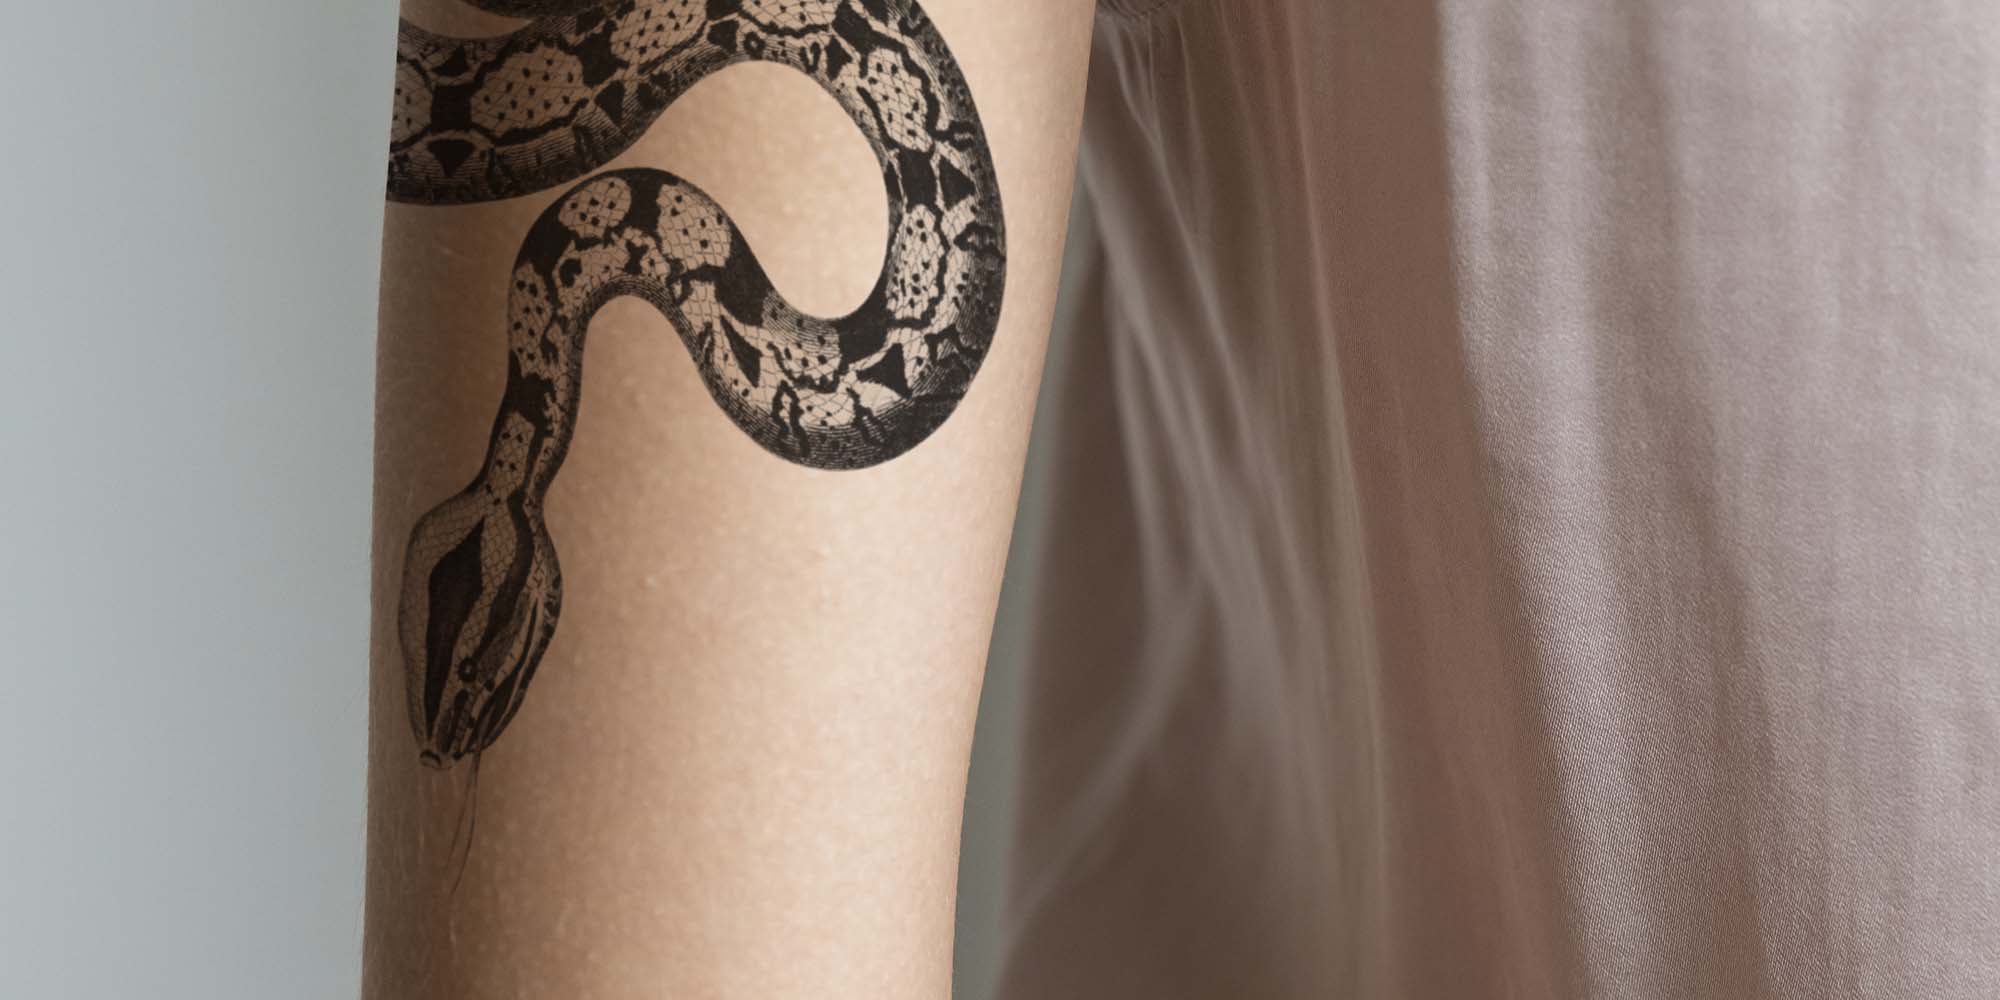 Closeup of arm tattoo of a woman